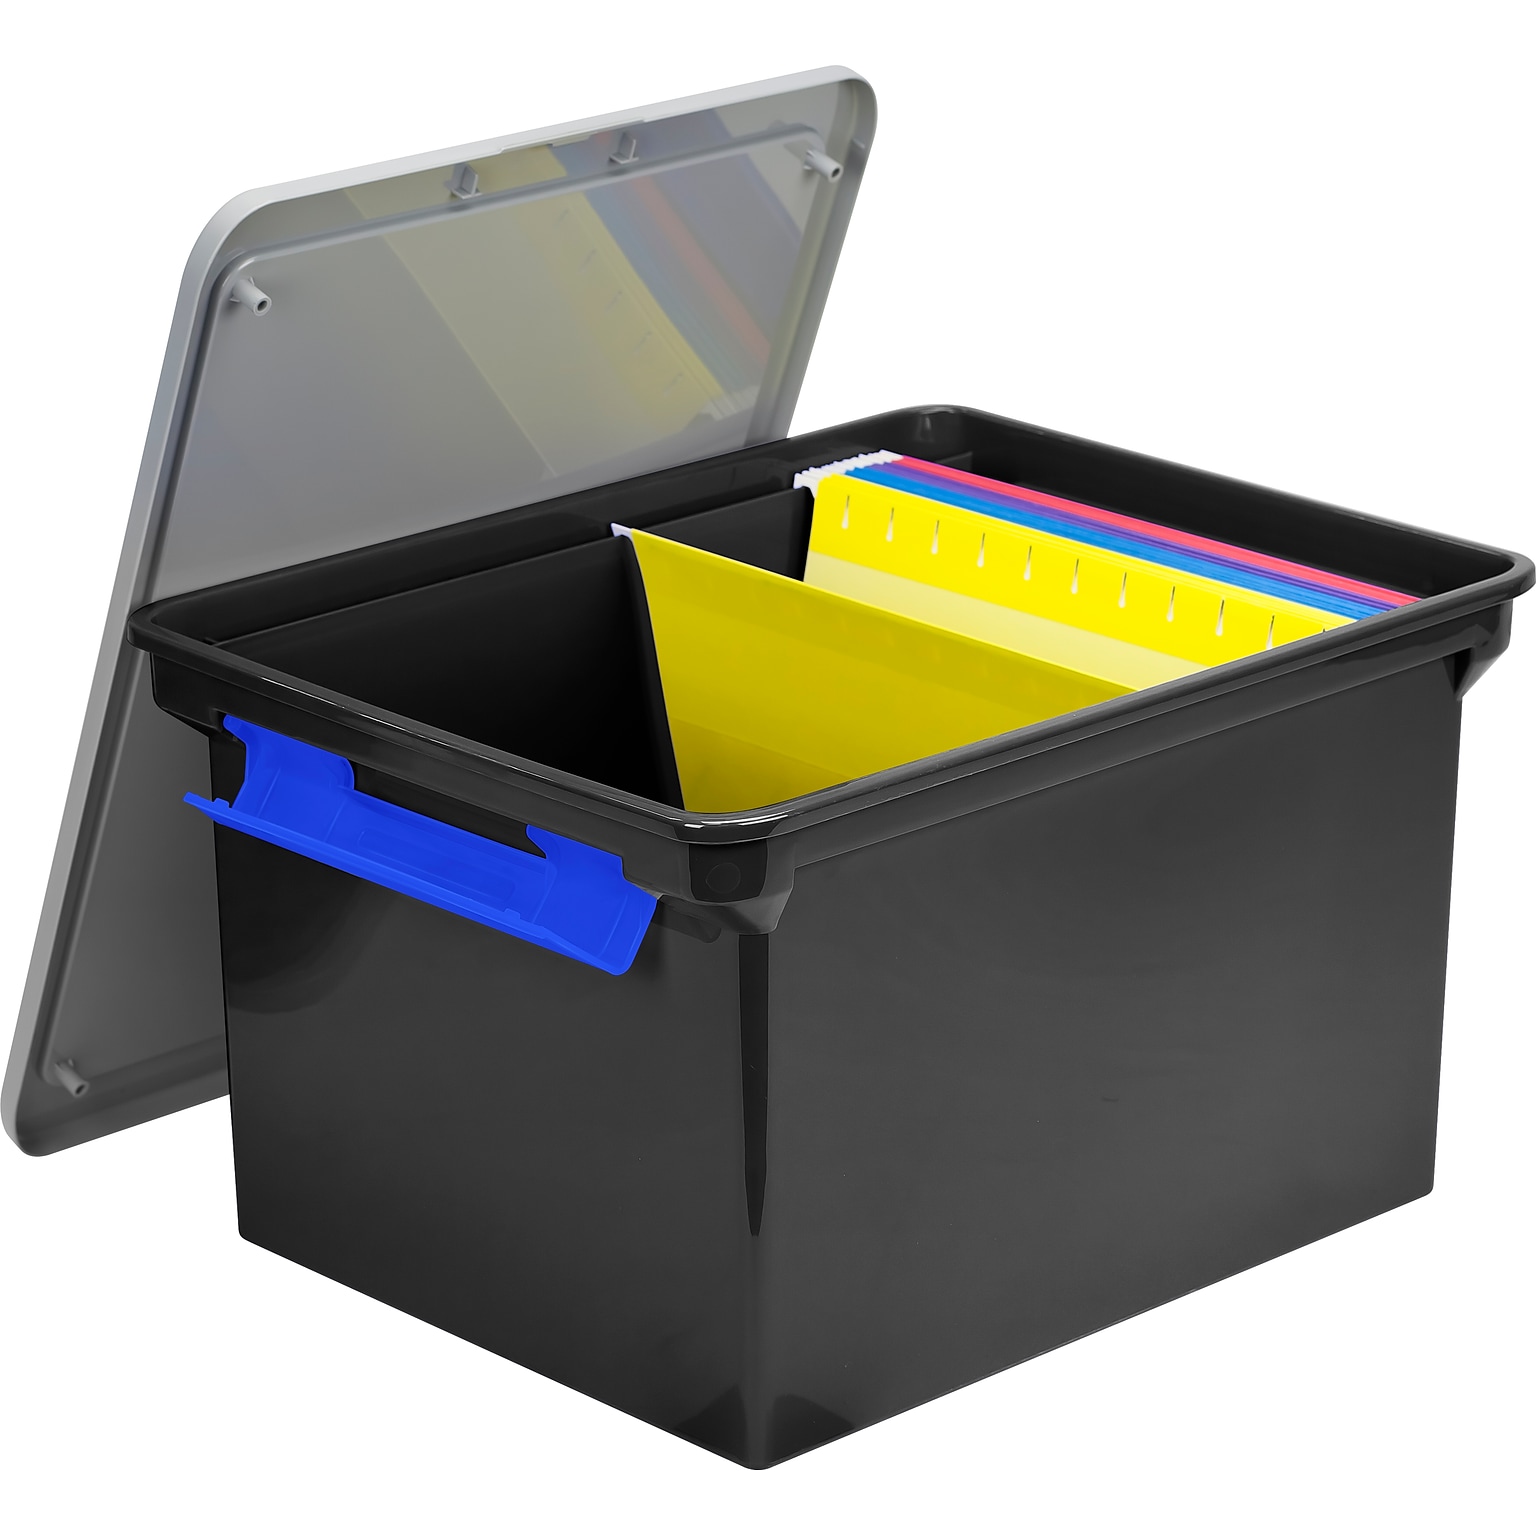 Storex Letter/Legal Portable File Tote Storage Box With Locking Handle,  Letter/Legal Size, Black (STX61543U01C)